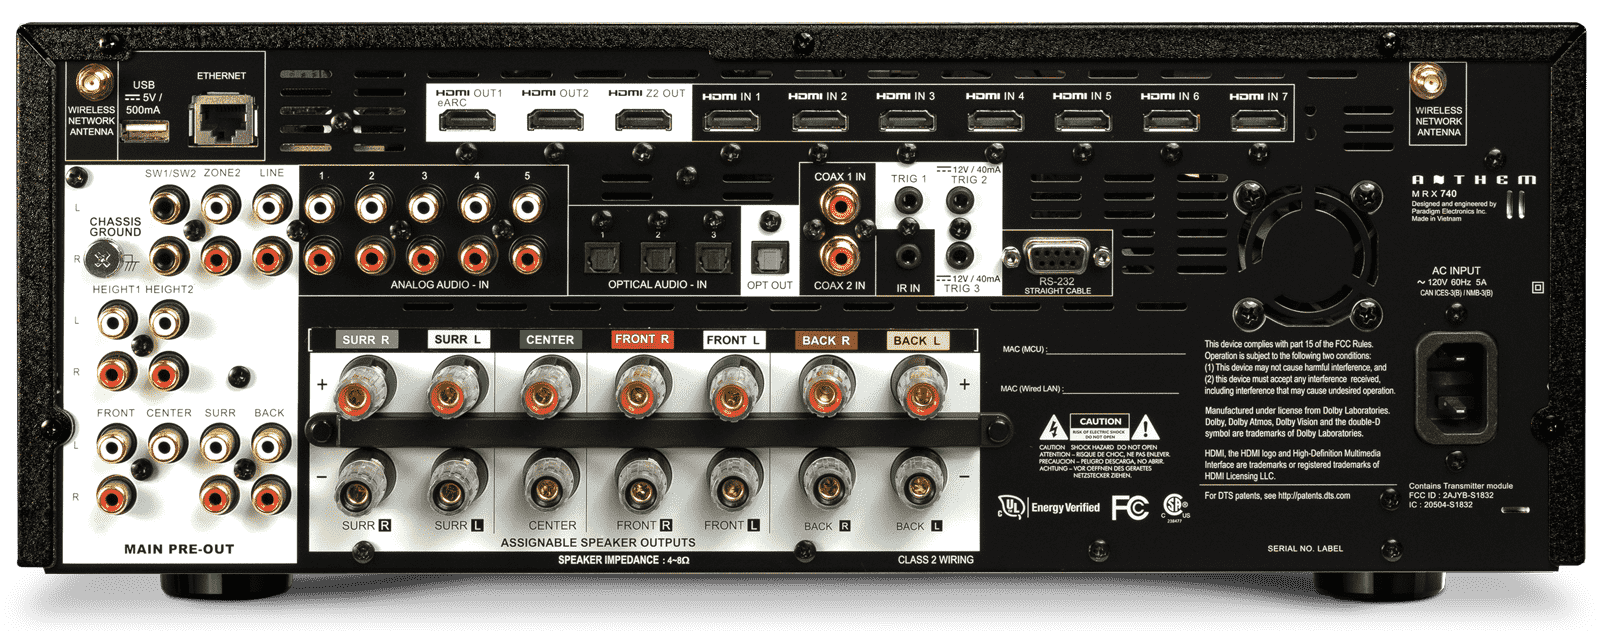 Anthem MRX 740 11.2 AV Amplifier